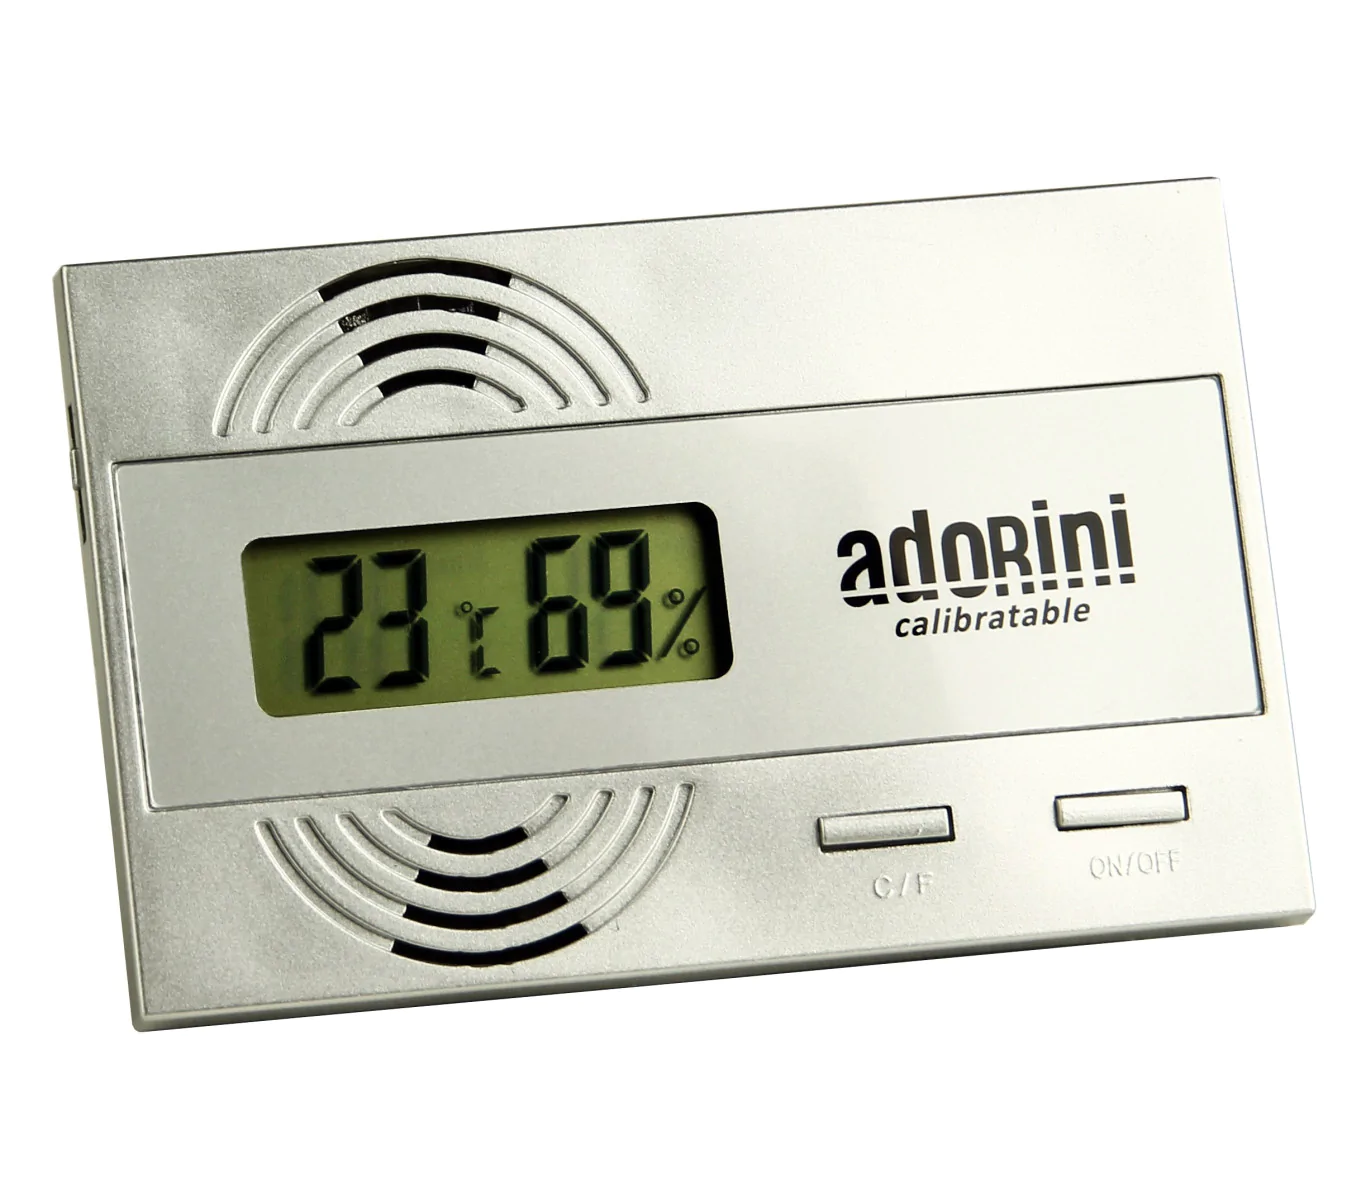 https://www.humidordiscount.com/32117-seo/adorini-digital-hygrometer-thermometer-silver.webp